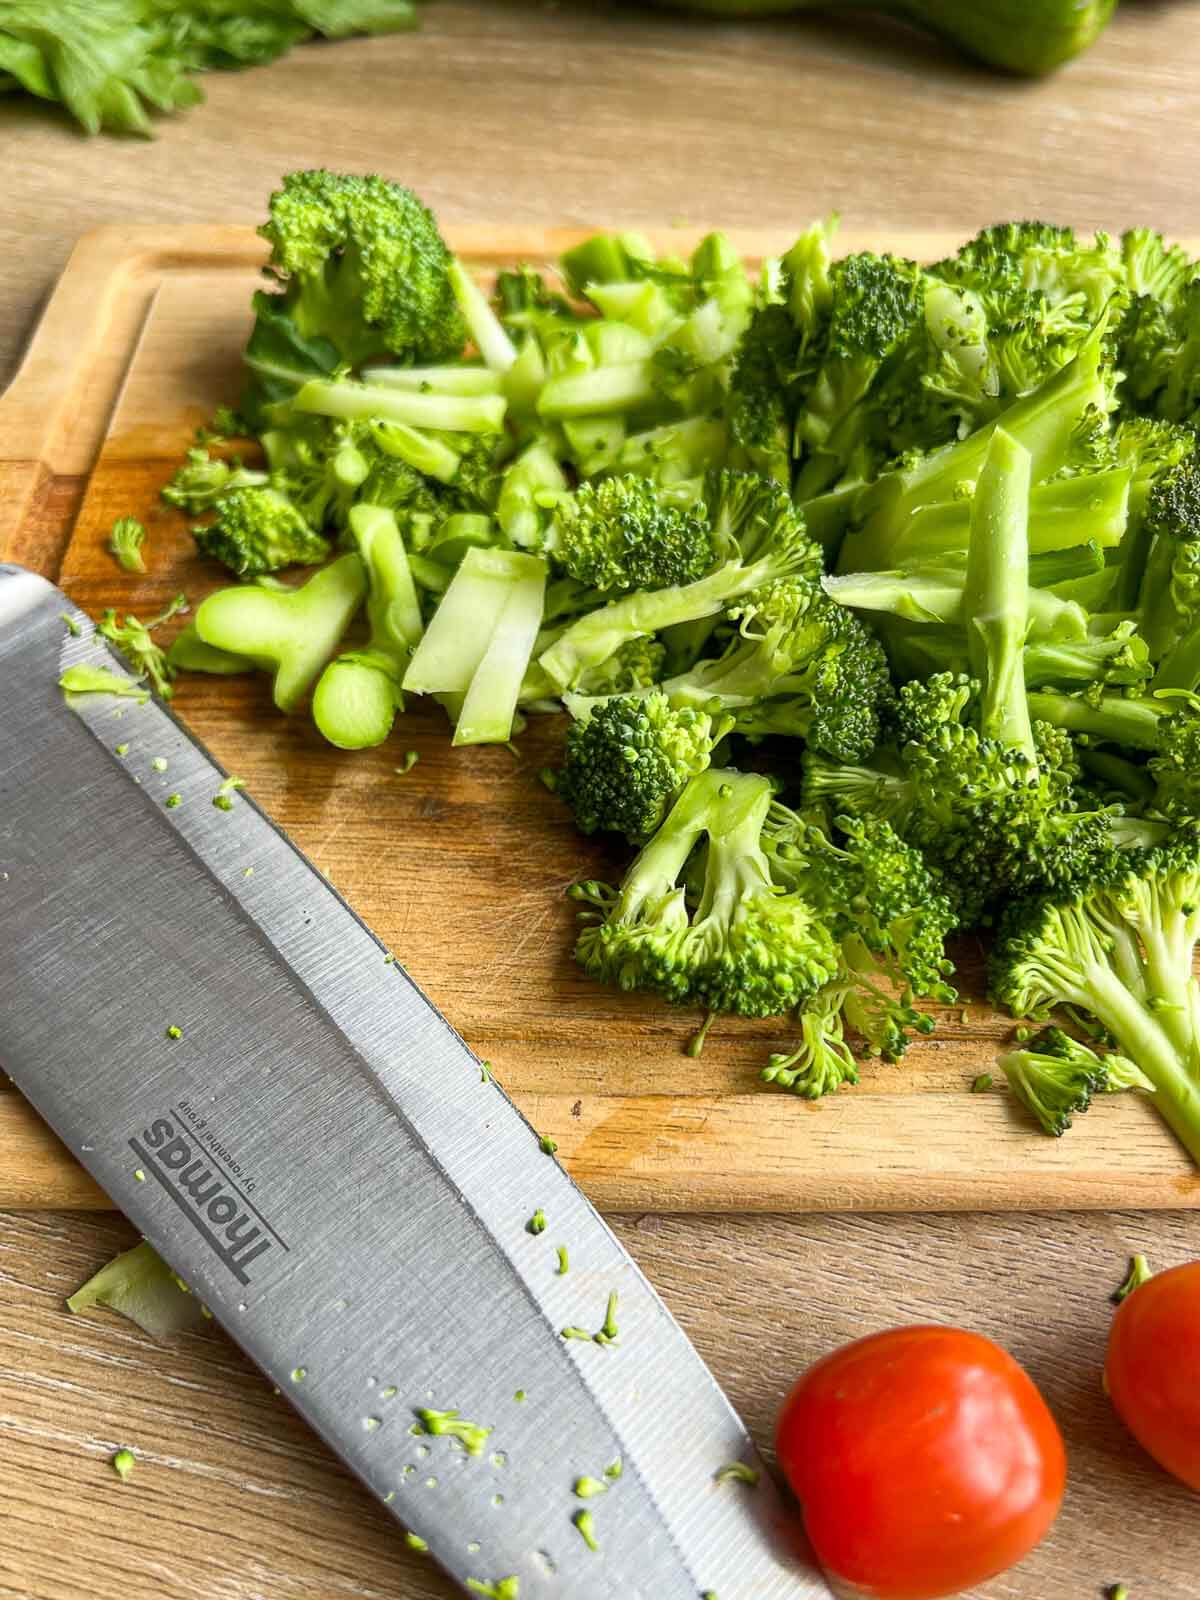 chop broccoli in medium to small slices